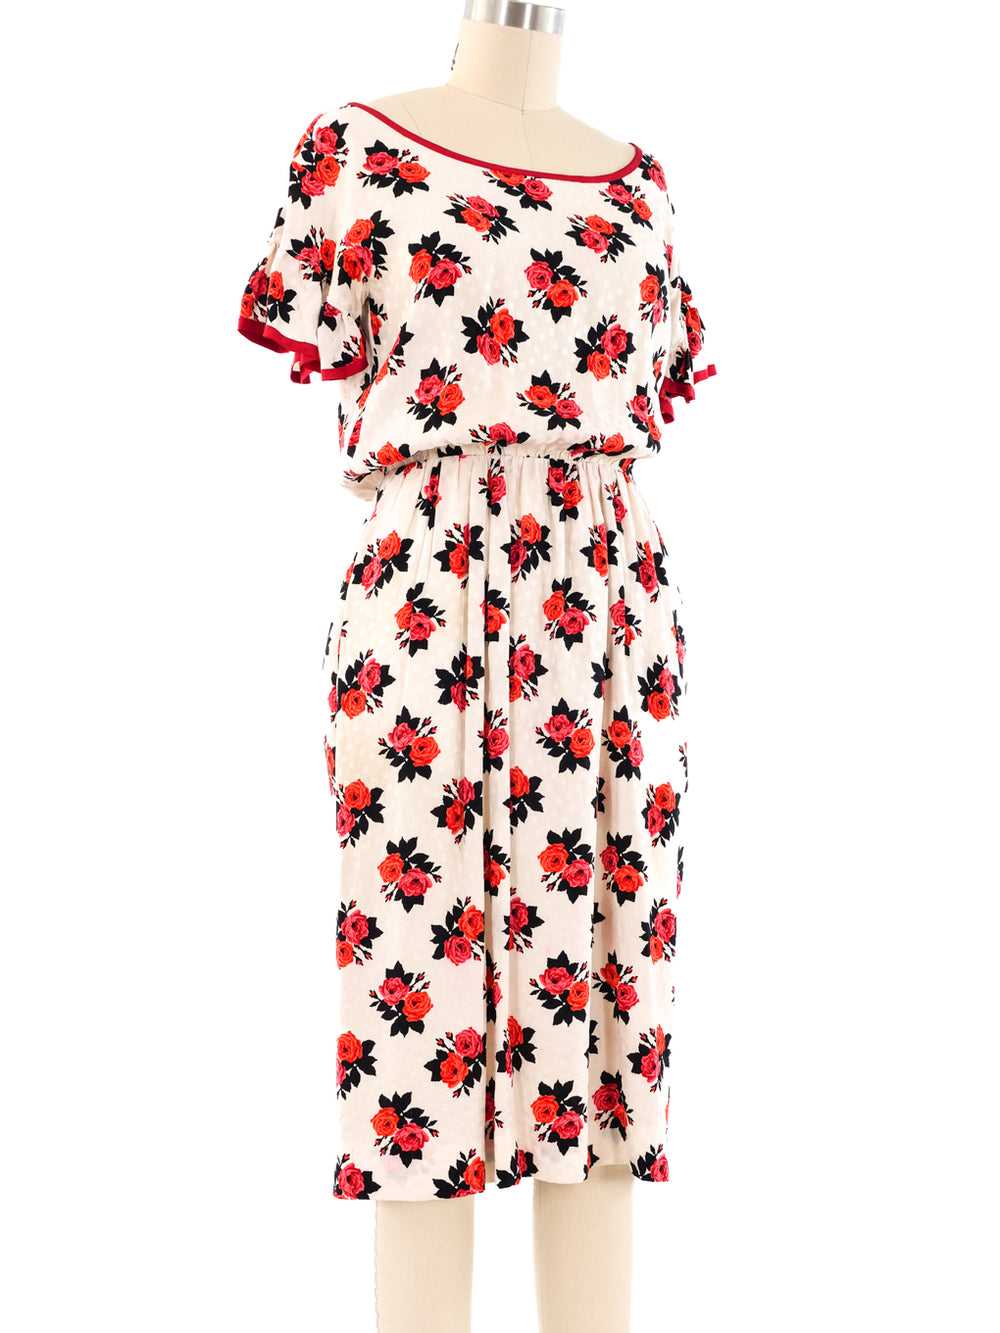 Yves Saint Laurent Rose Printed Silk Dress - image 3